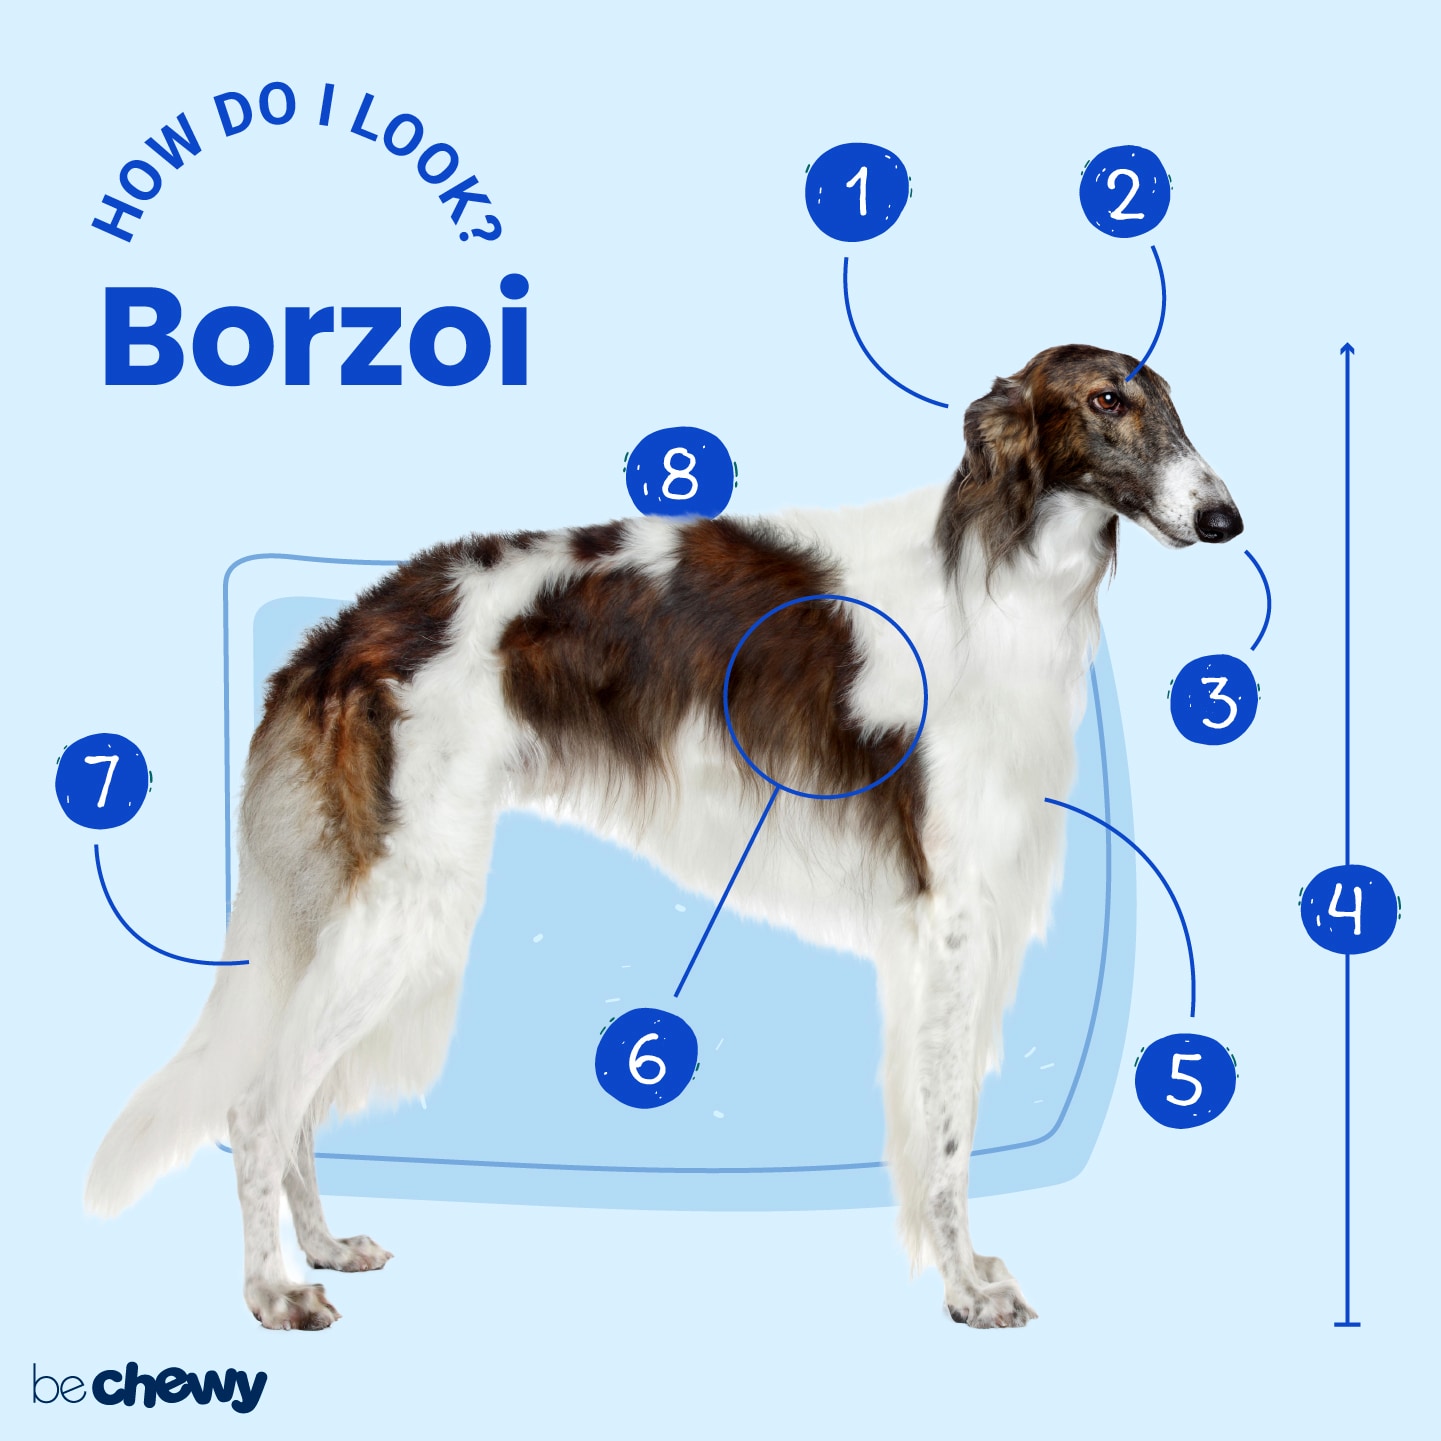 borzoi shedding a lot